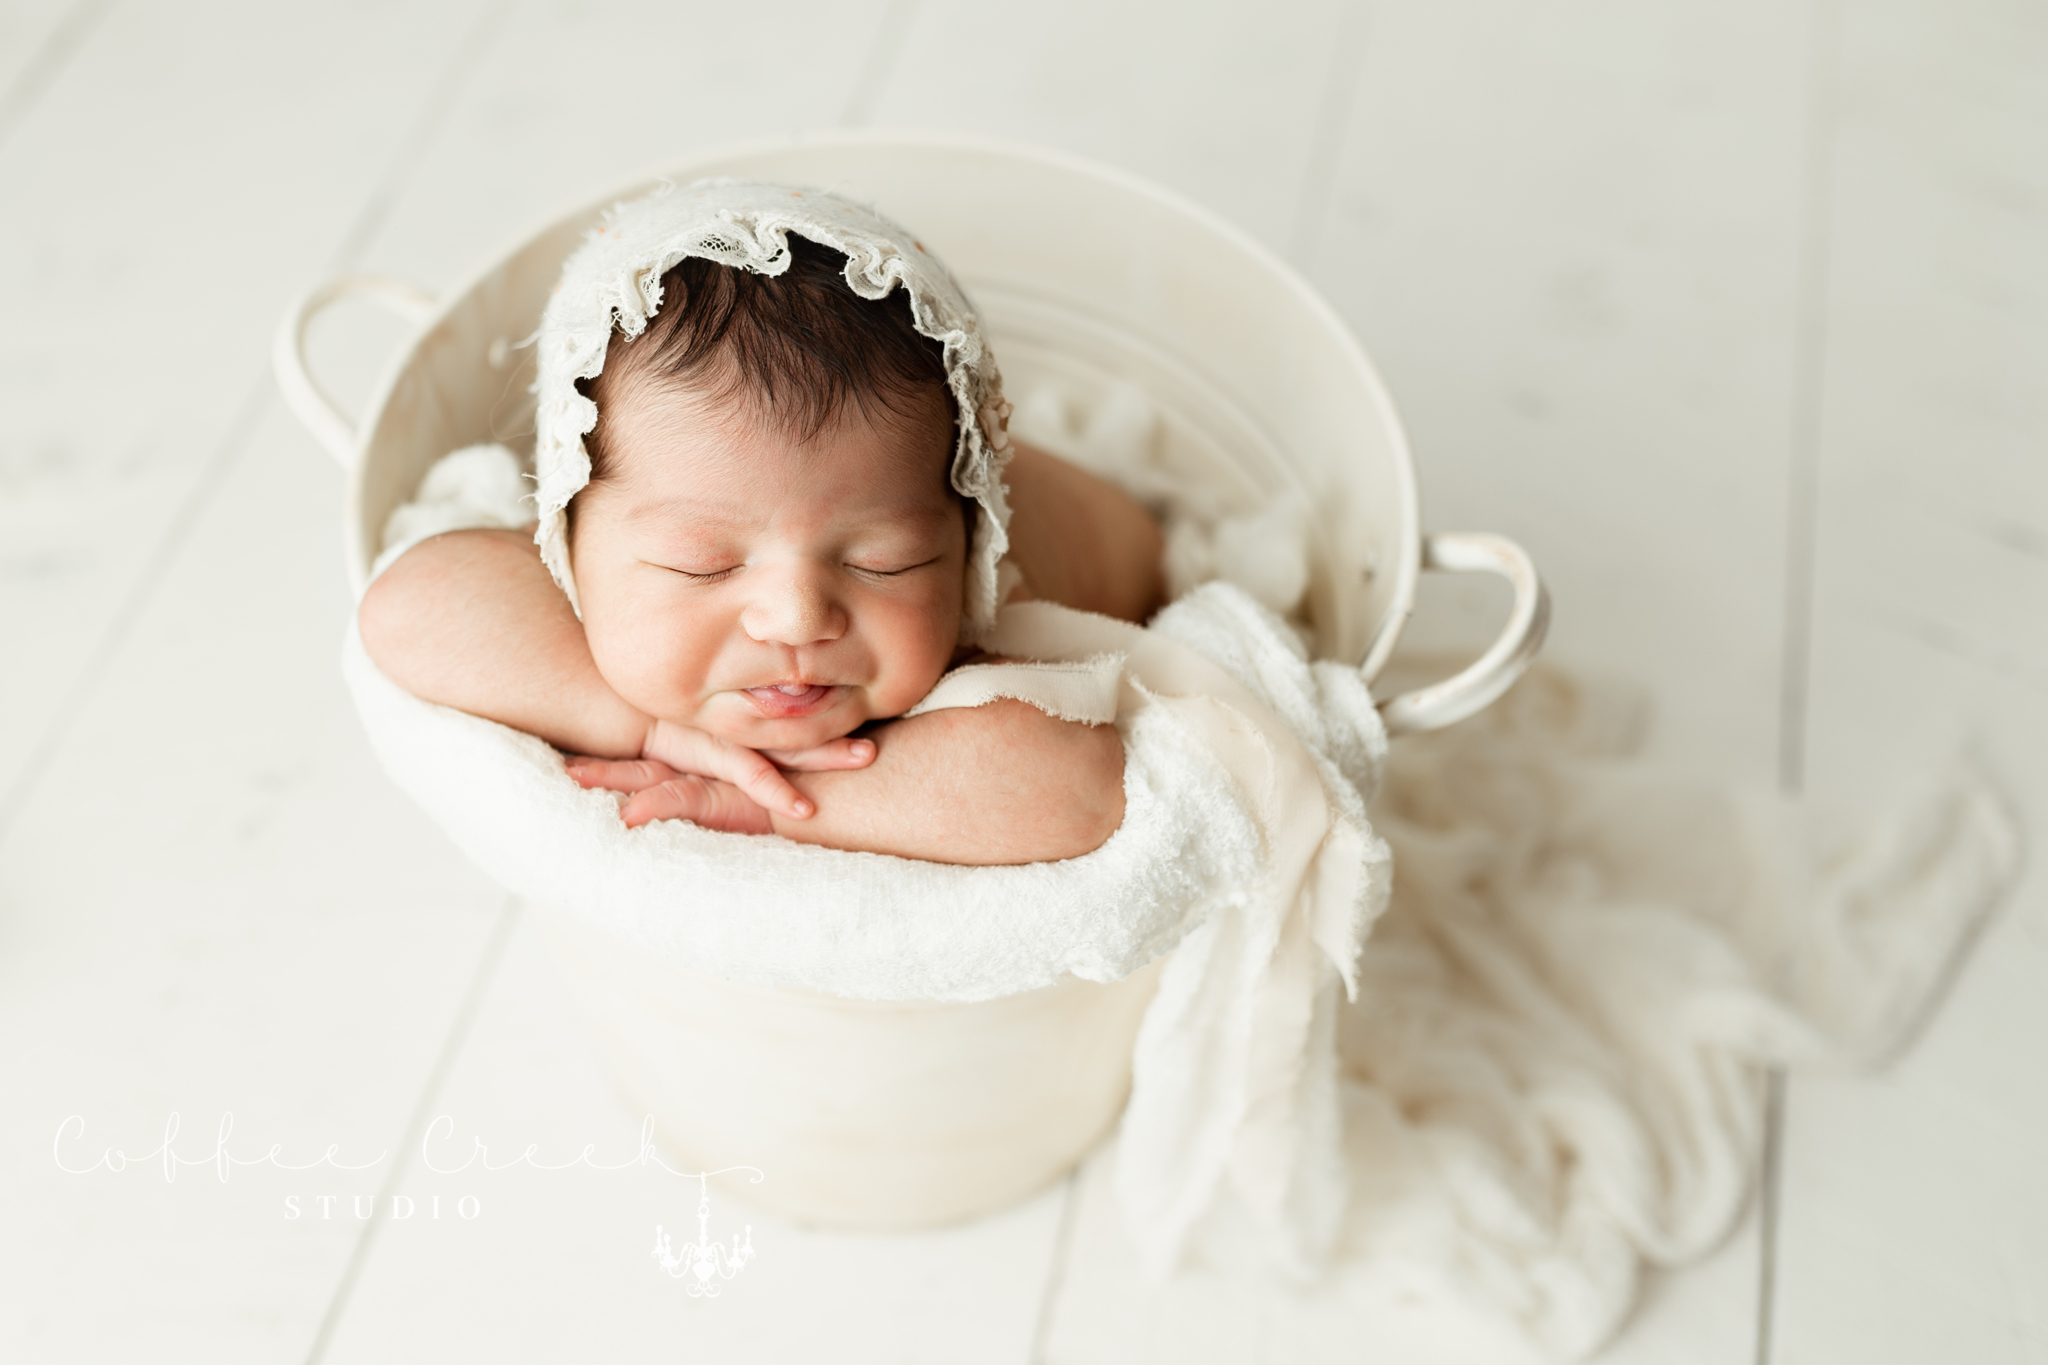 newborn baby in bucket with bonnet